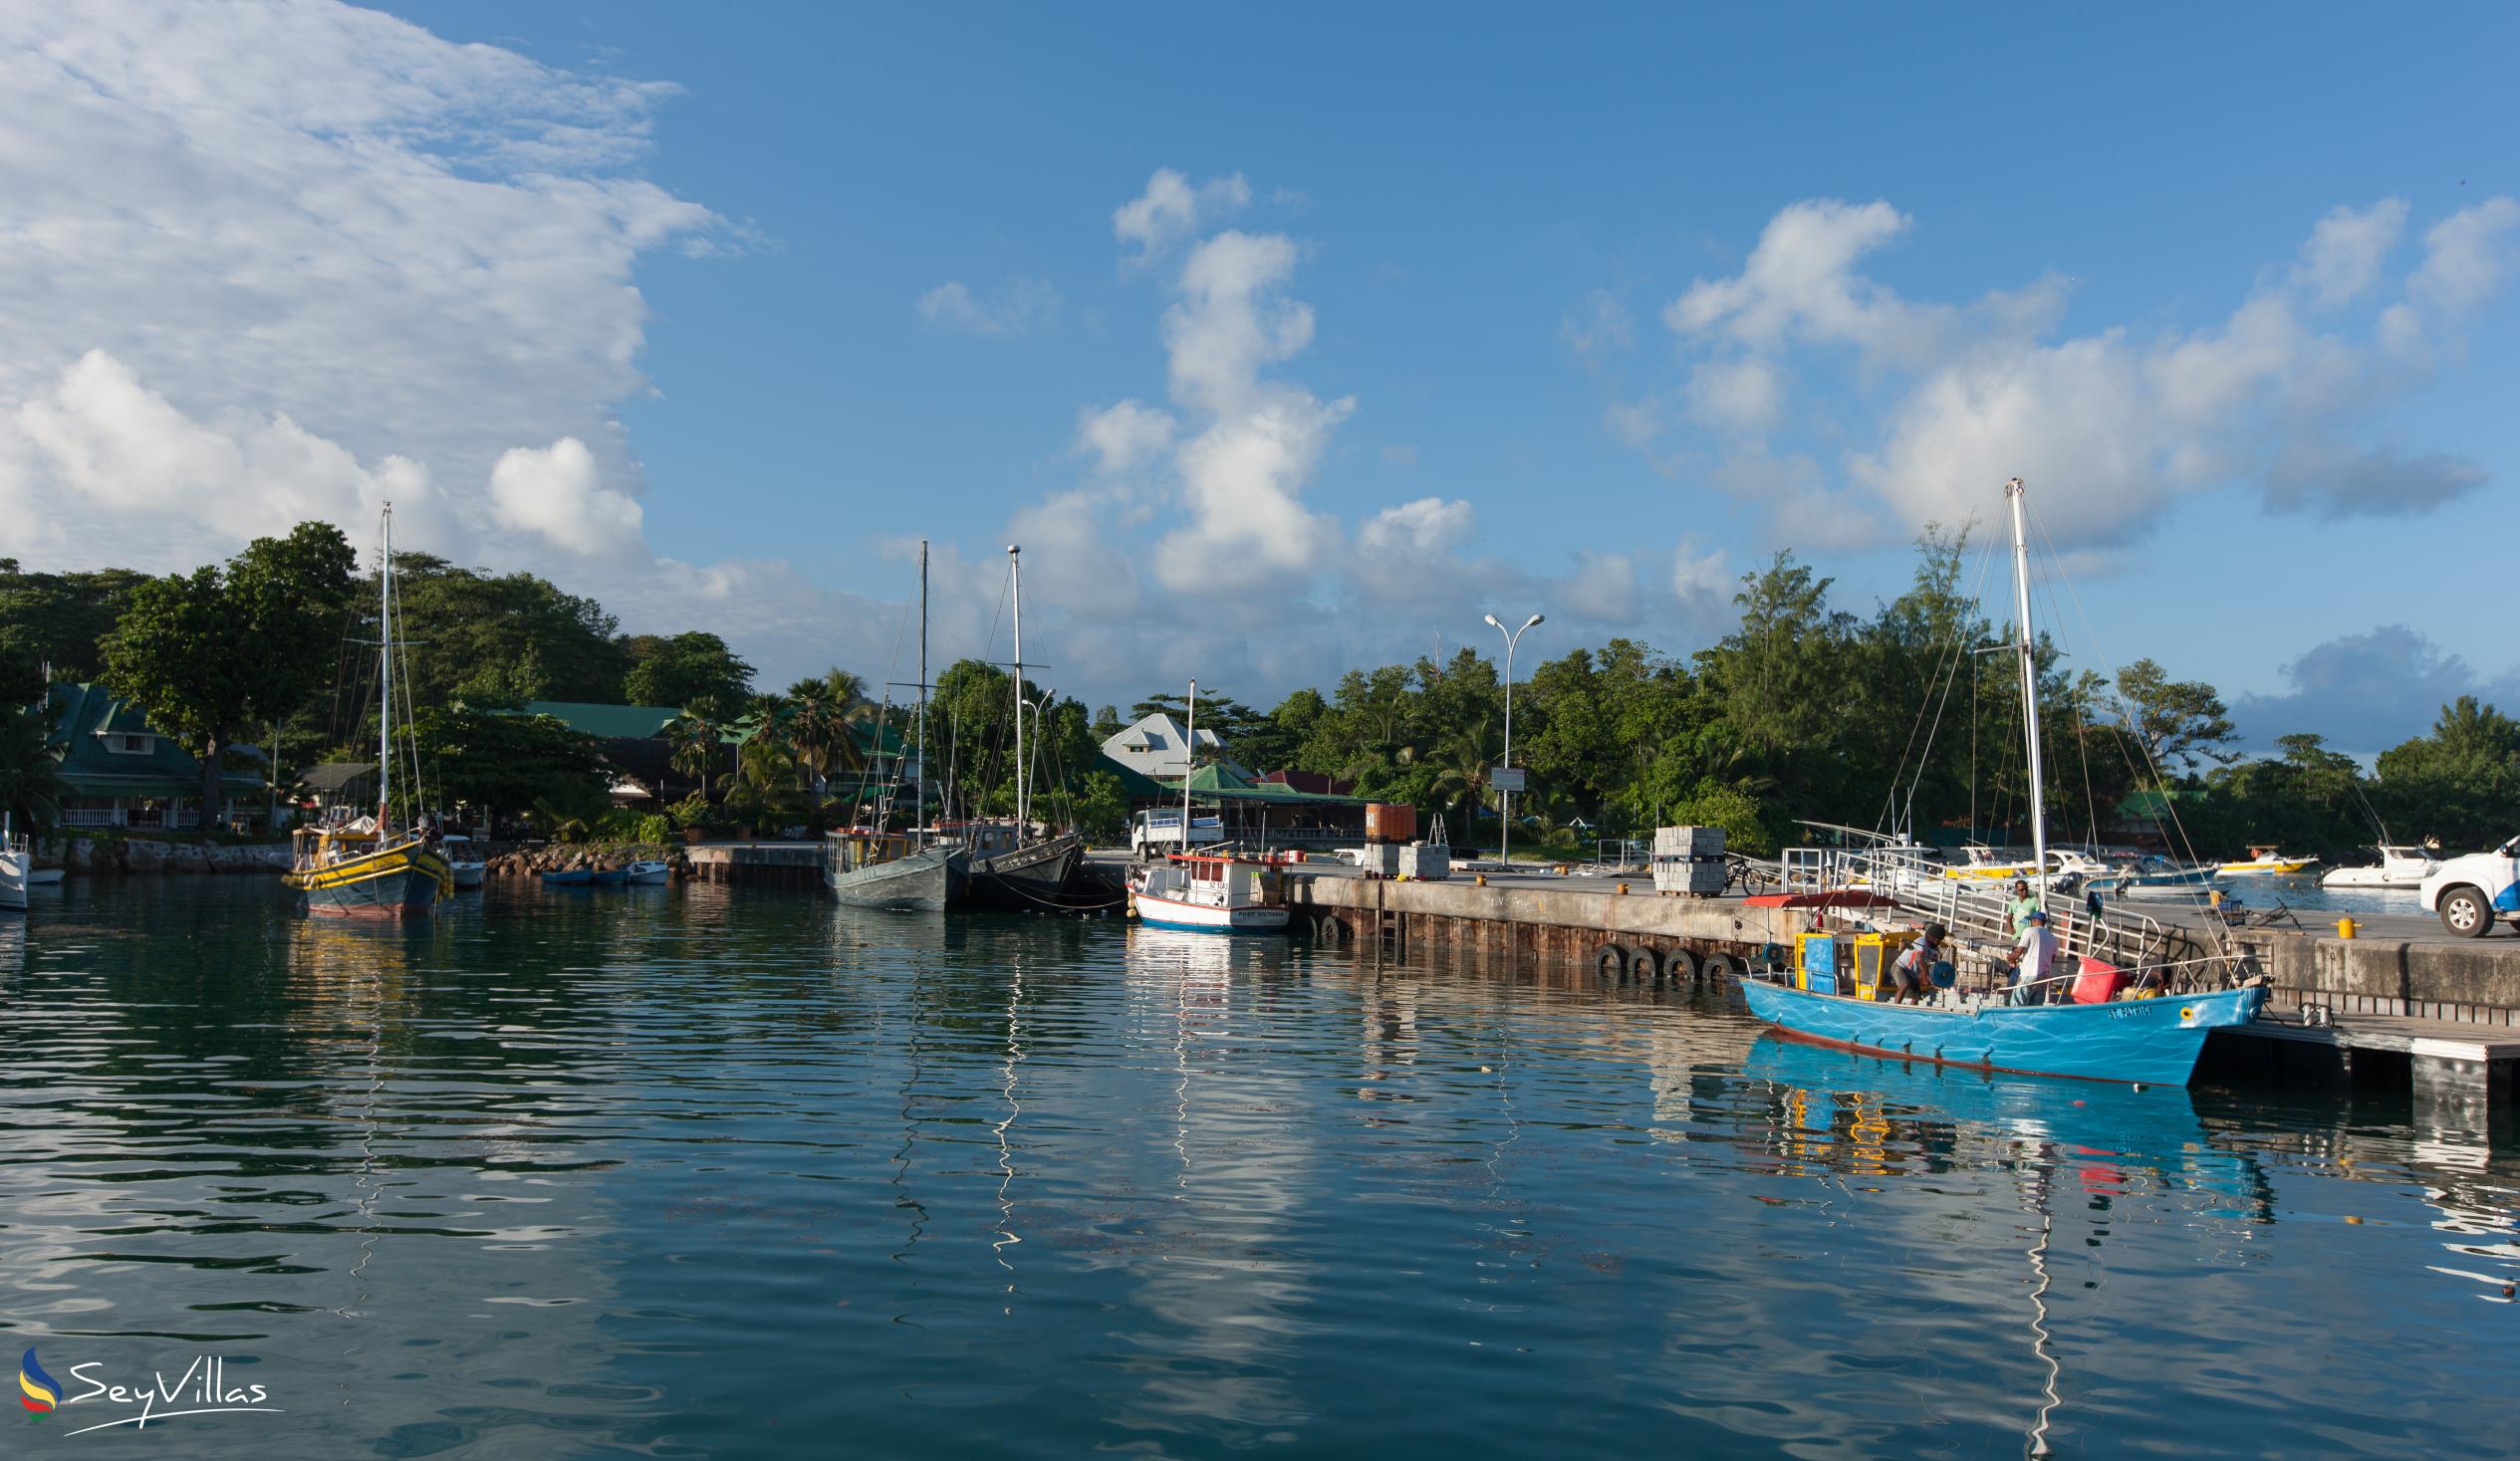 Photo 59: Tannette's Villa - Location - La Digue (Seychelles)